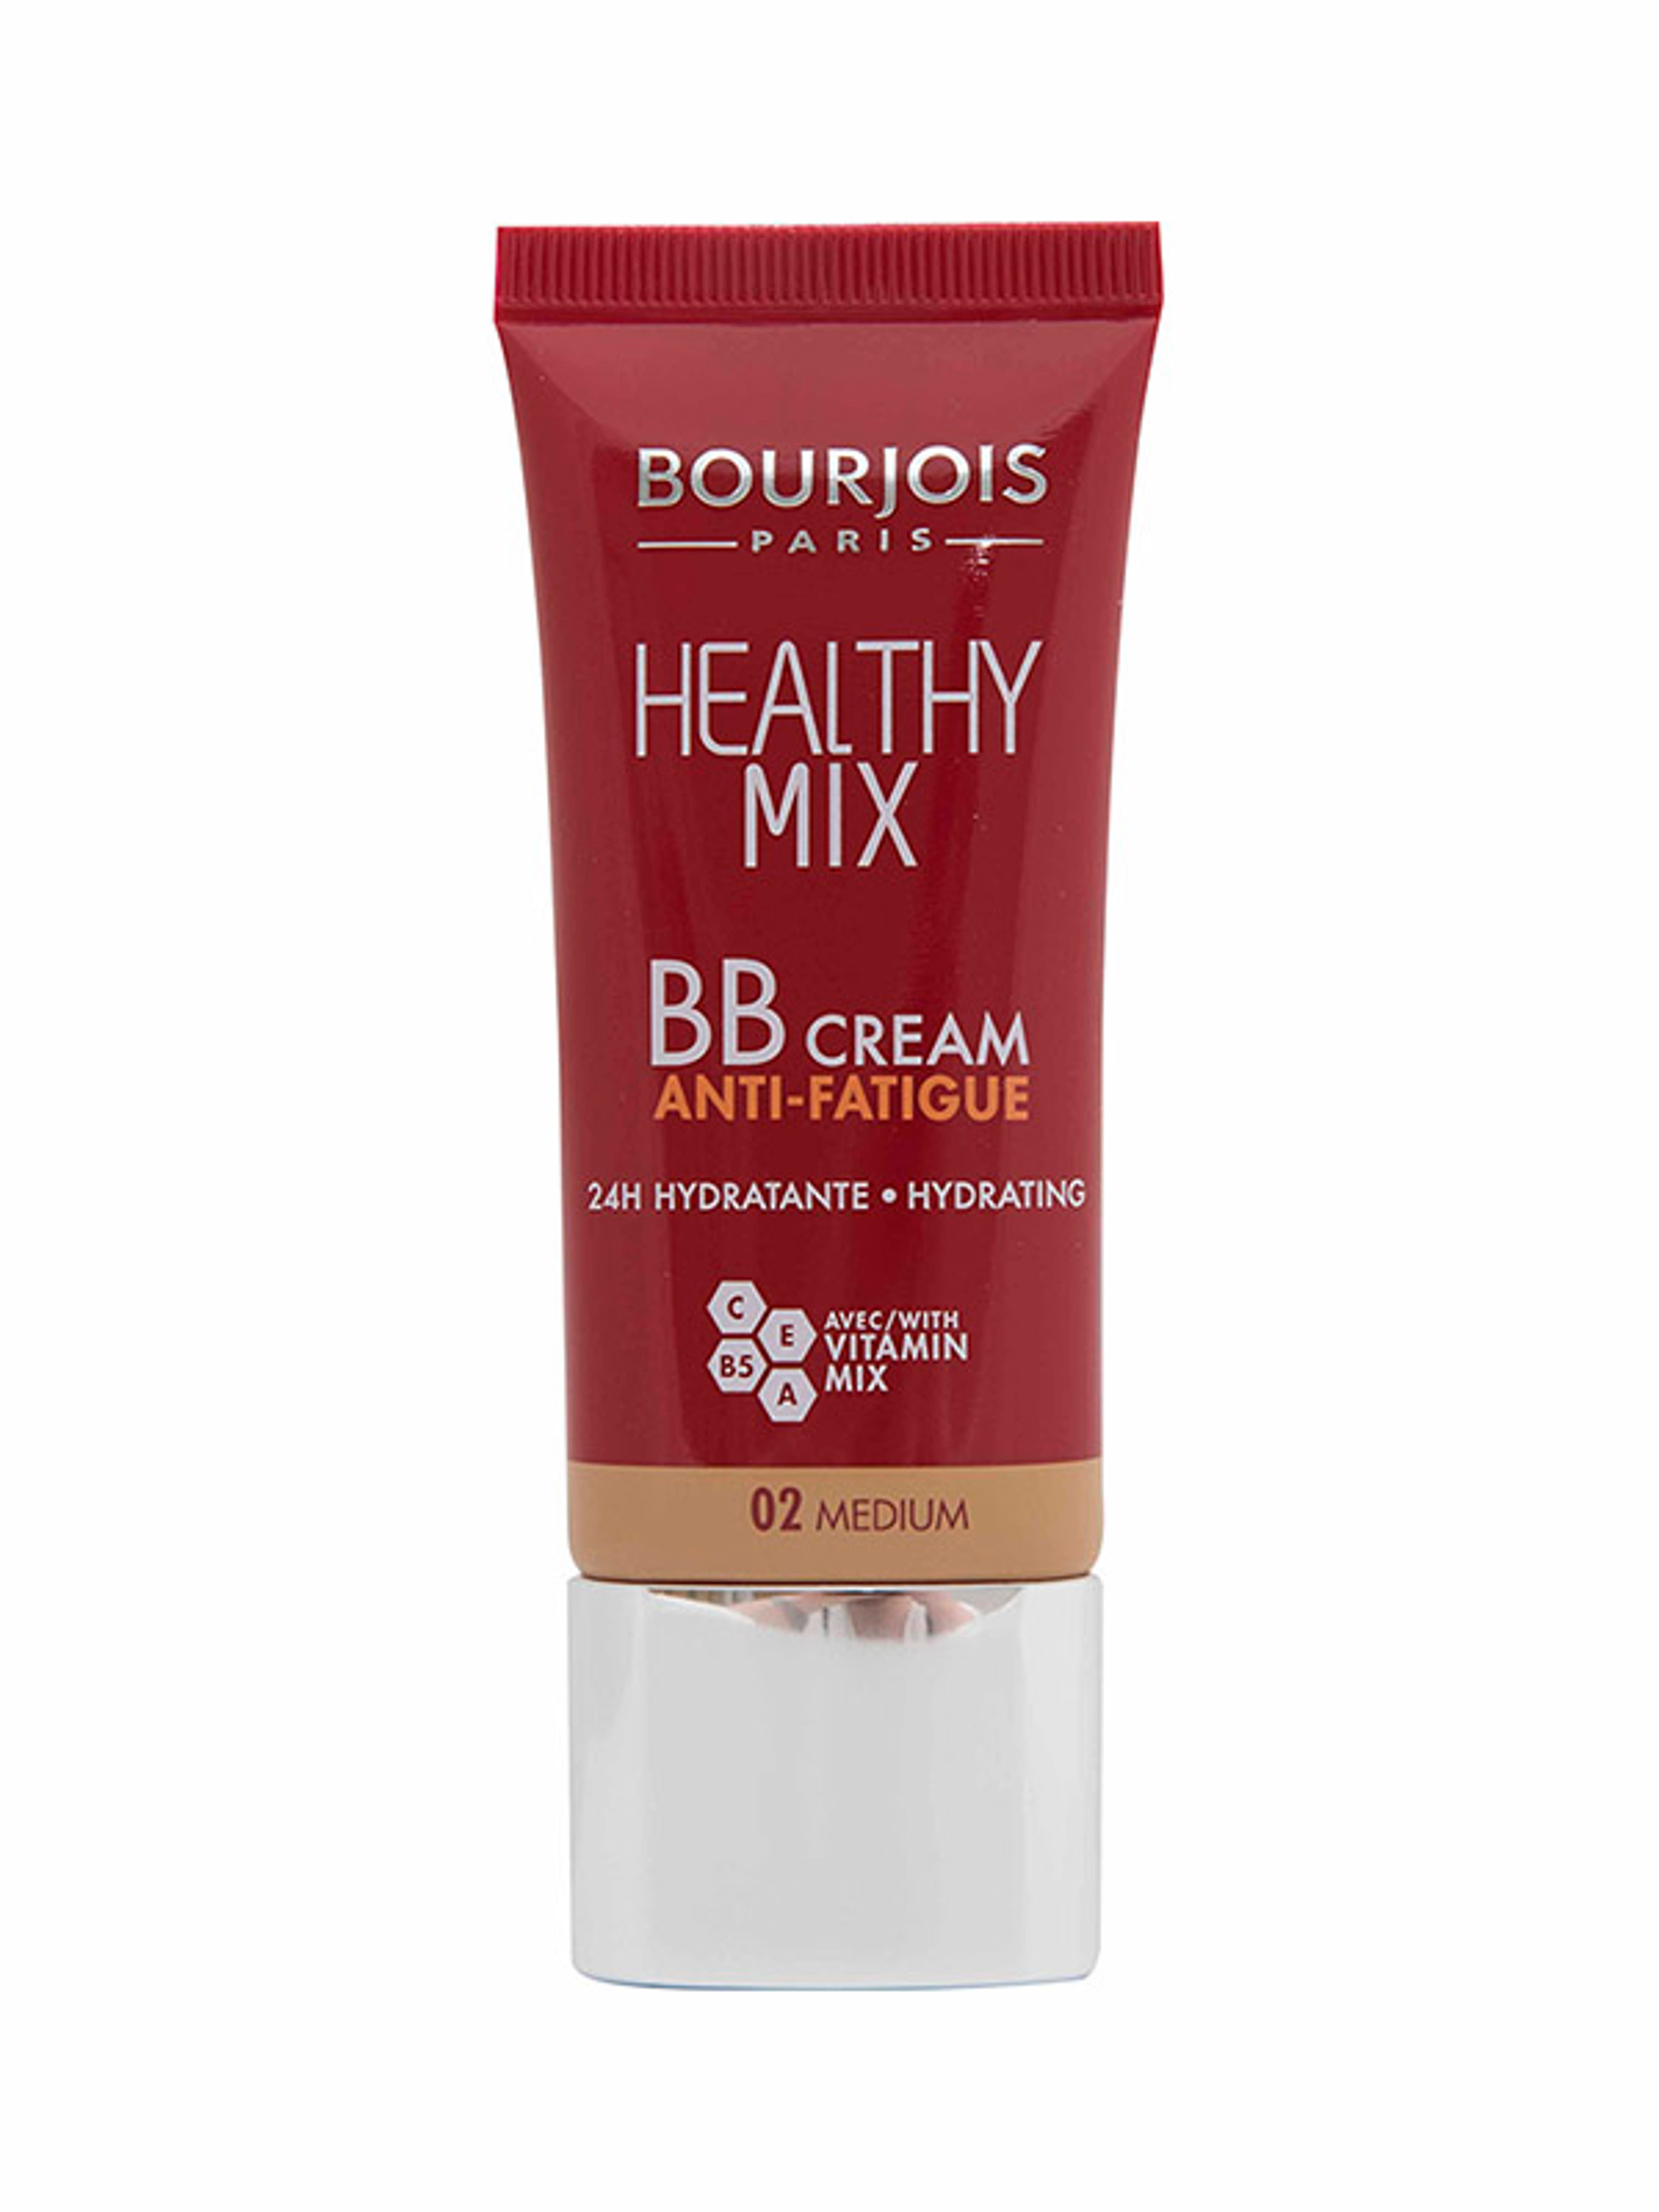 Bourjois arc bb krém healthy mix /002 - 1 db-1